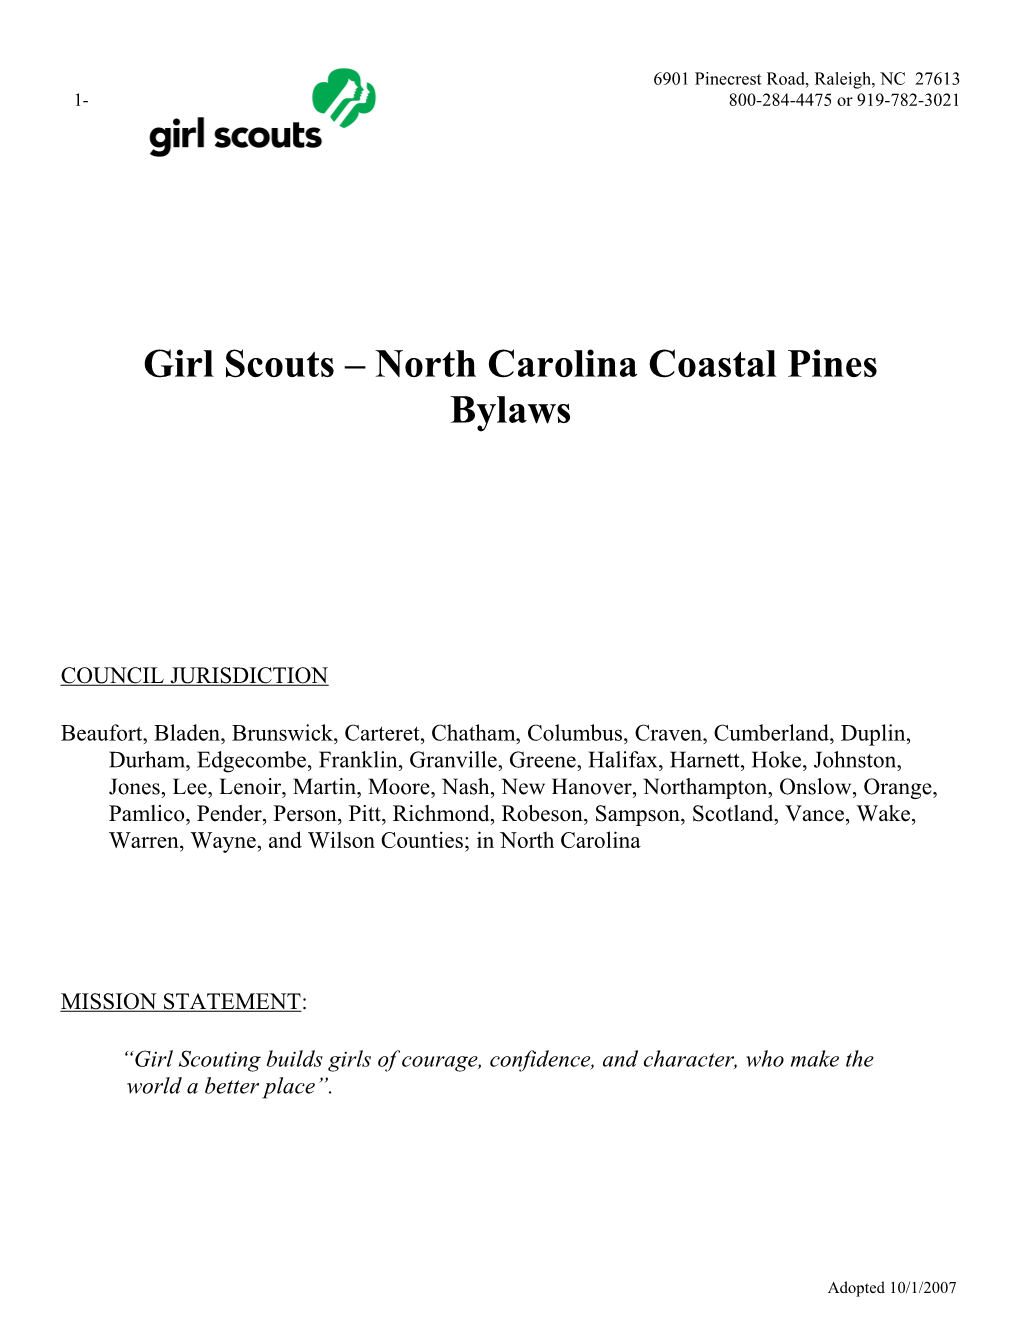 Girl Scouts – North Carolina Coastal Pines, Inc